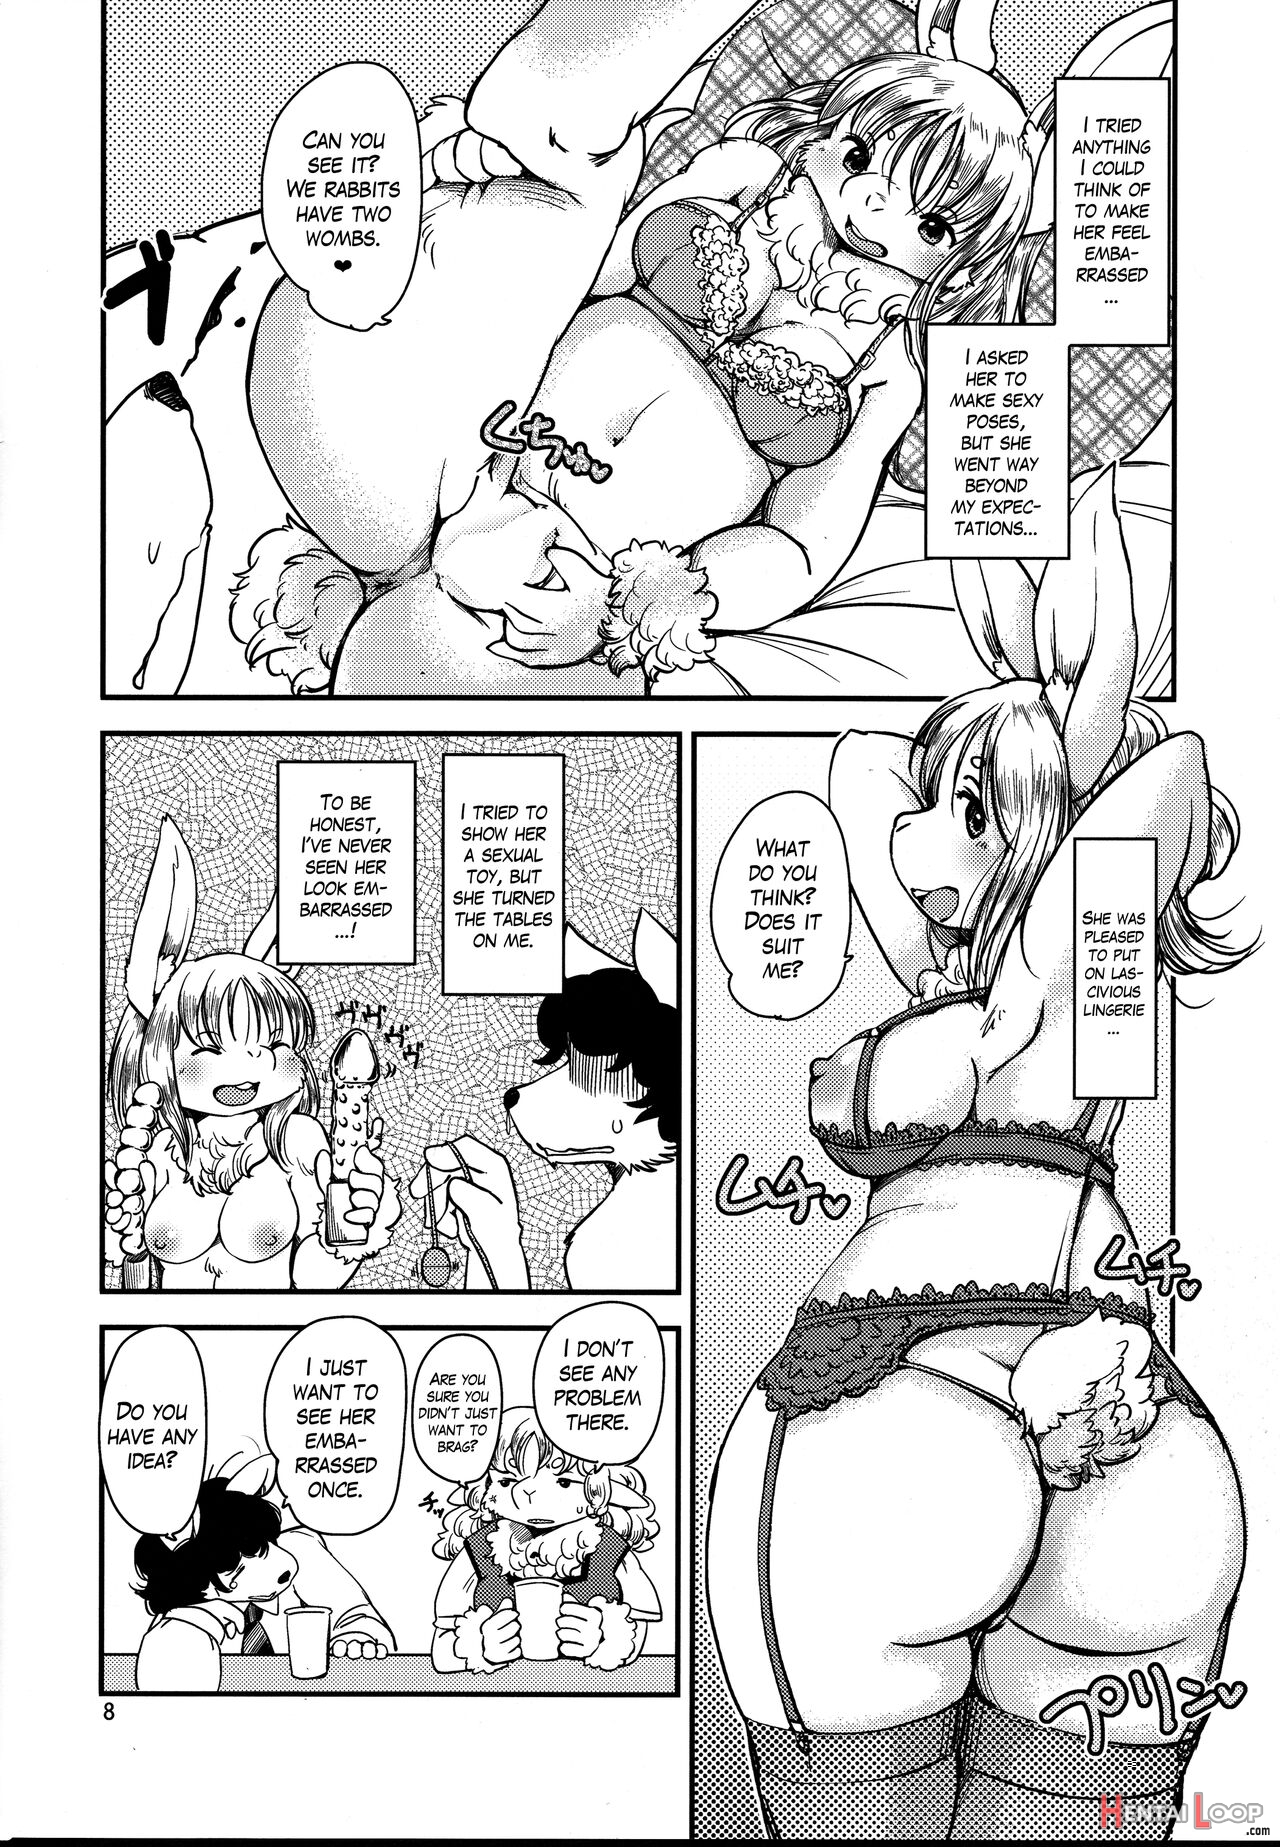 Bunny Girlfriend page 7